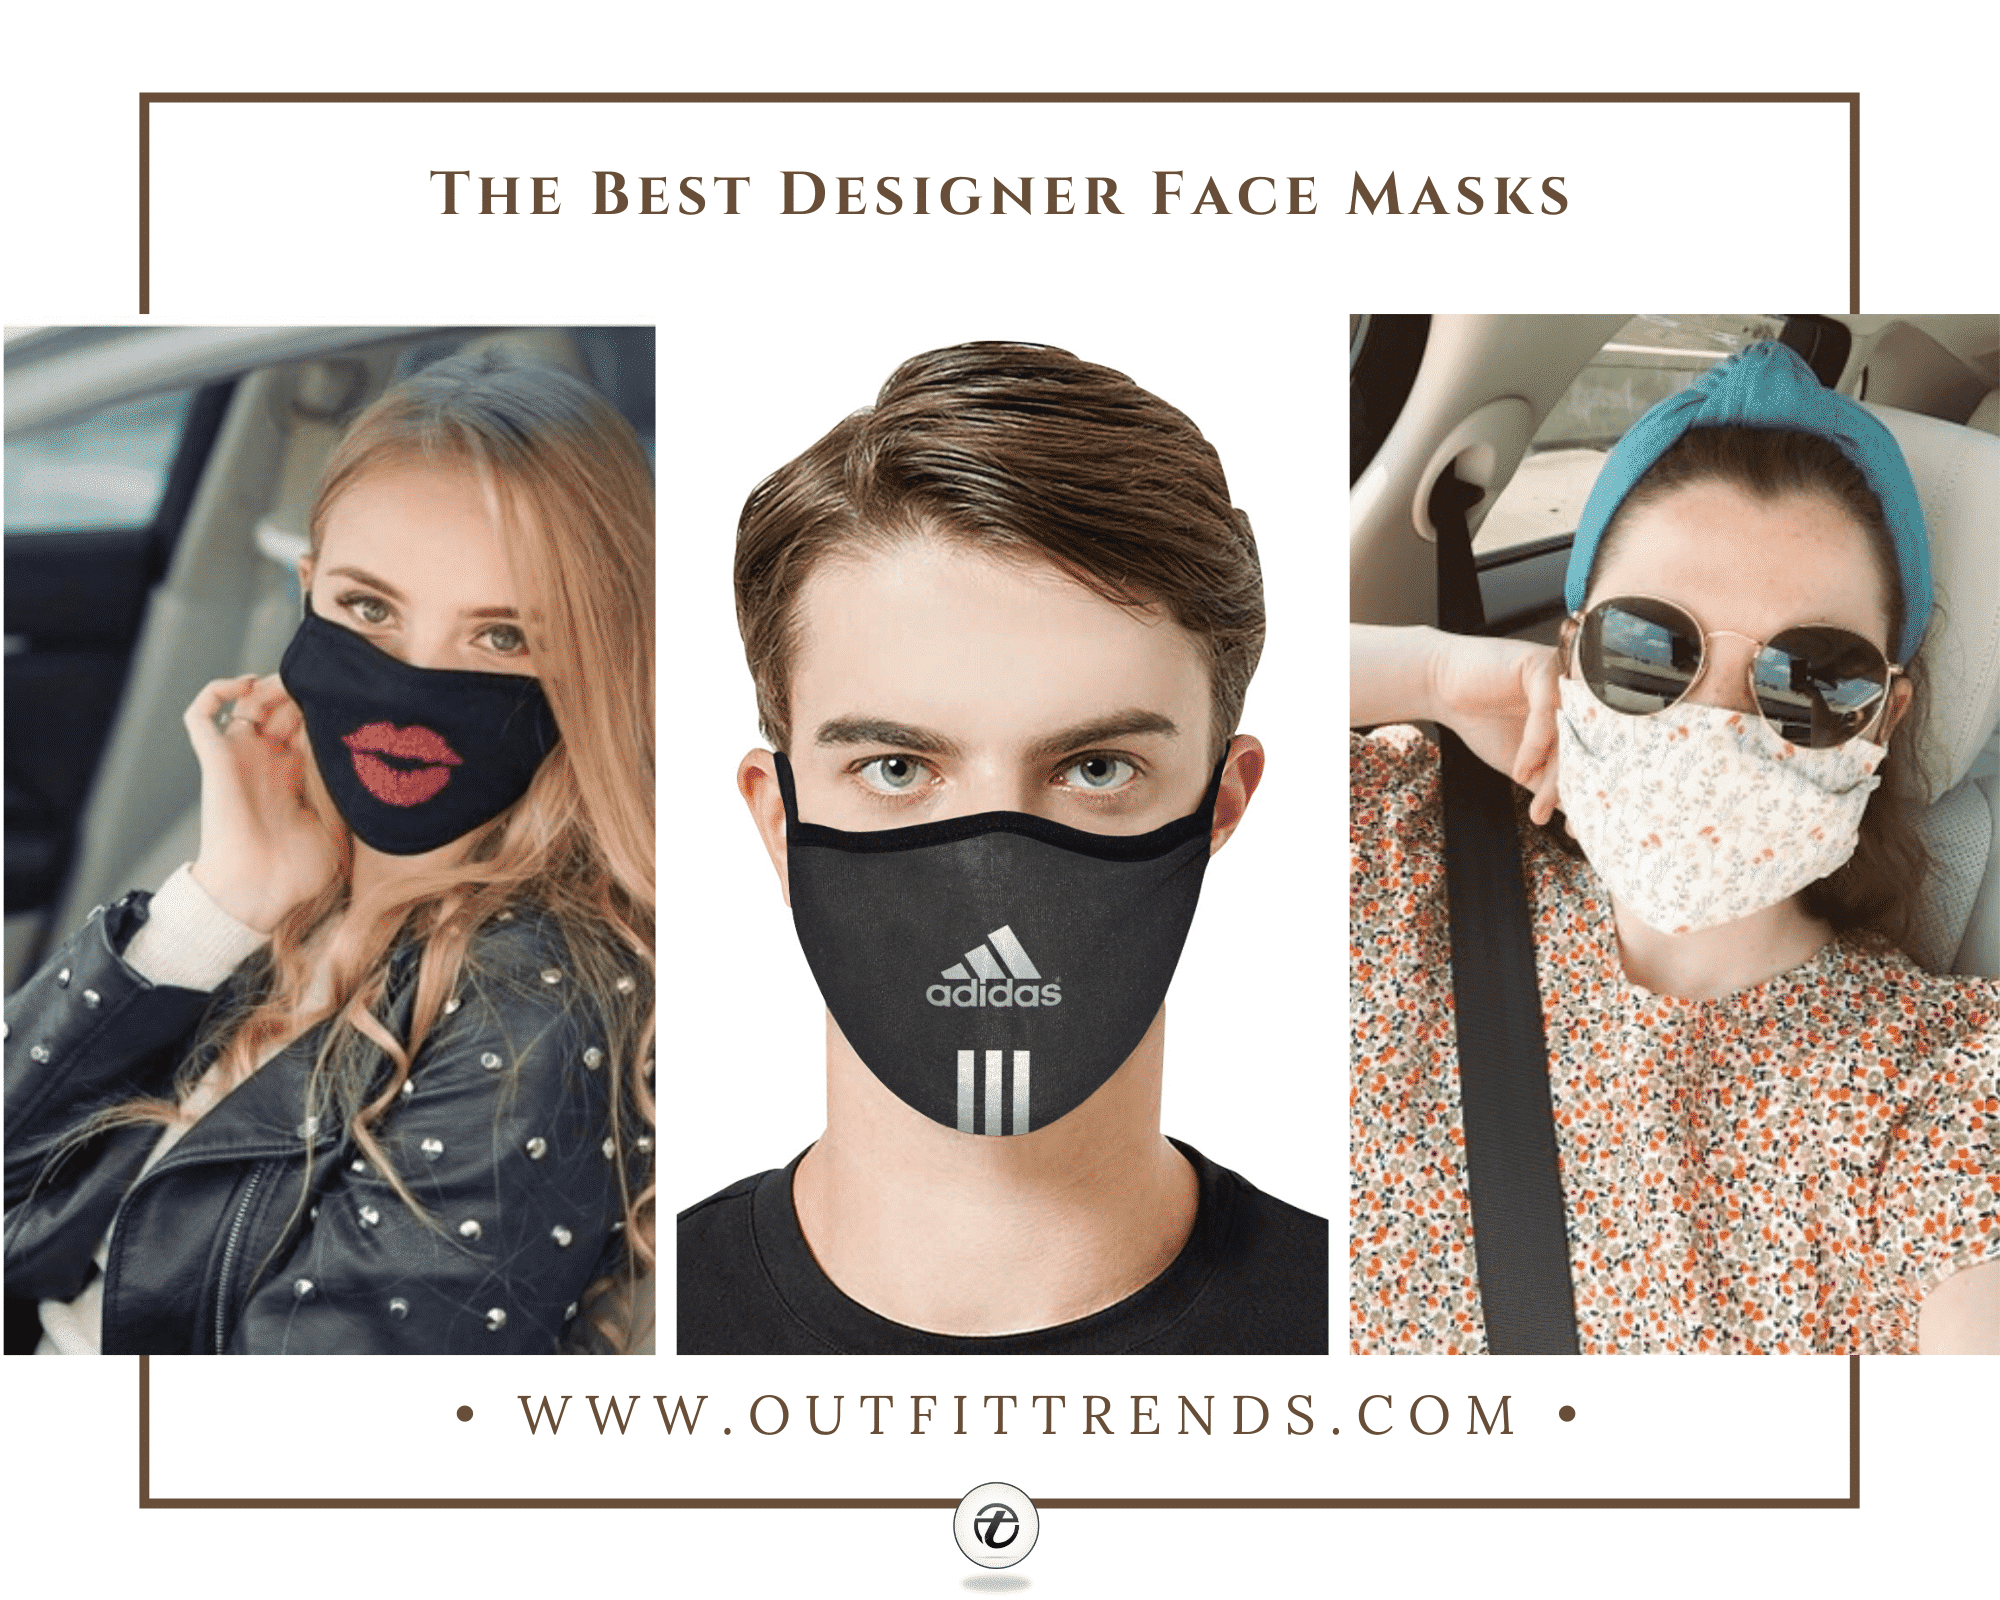 brands and designers making face masks